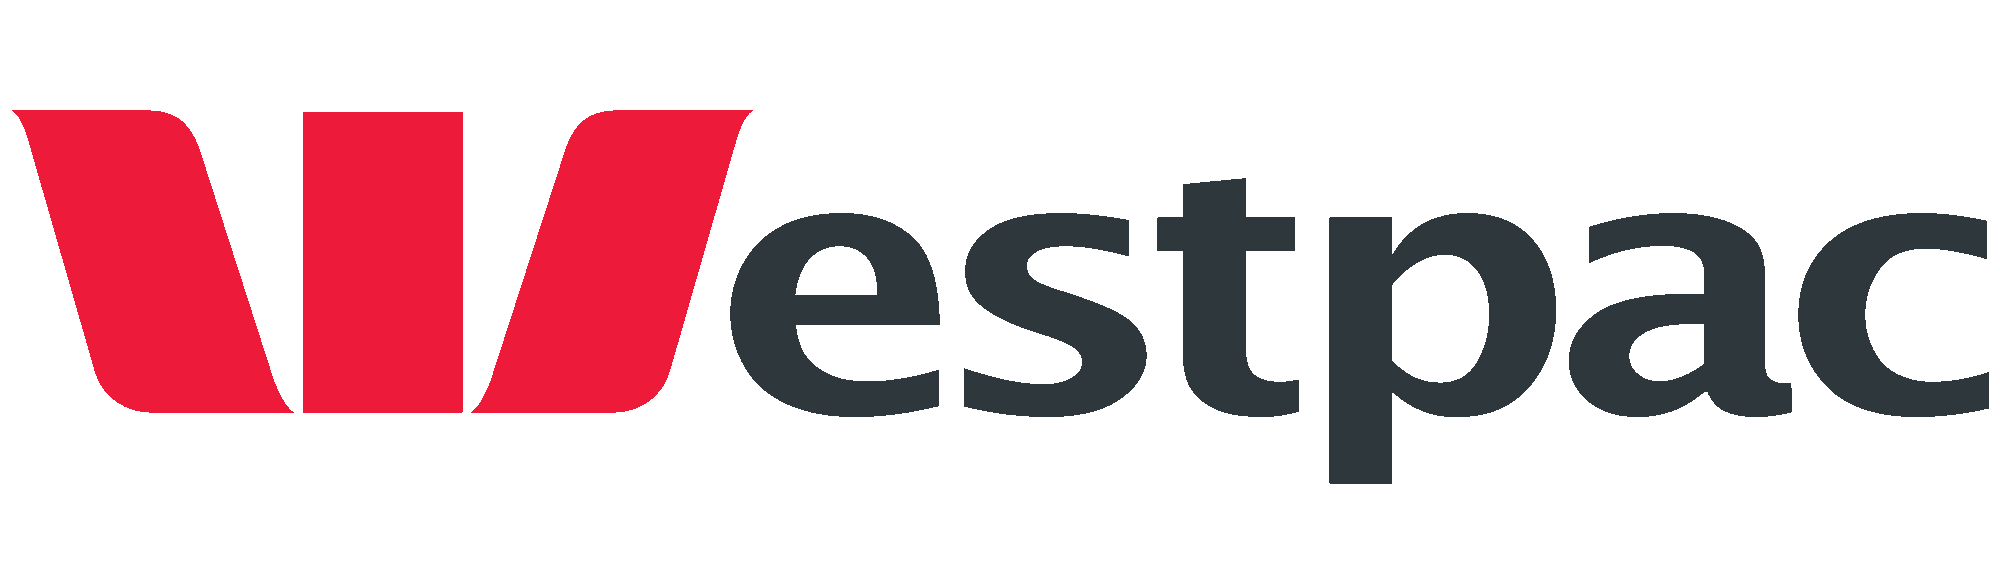 westpac-logo-2